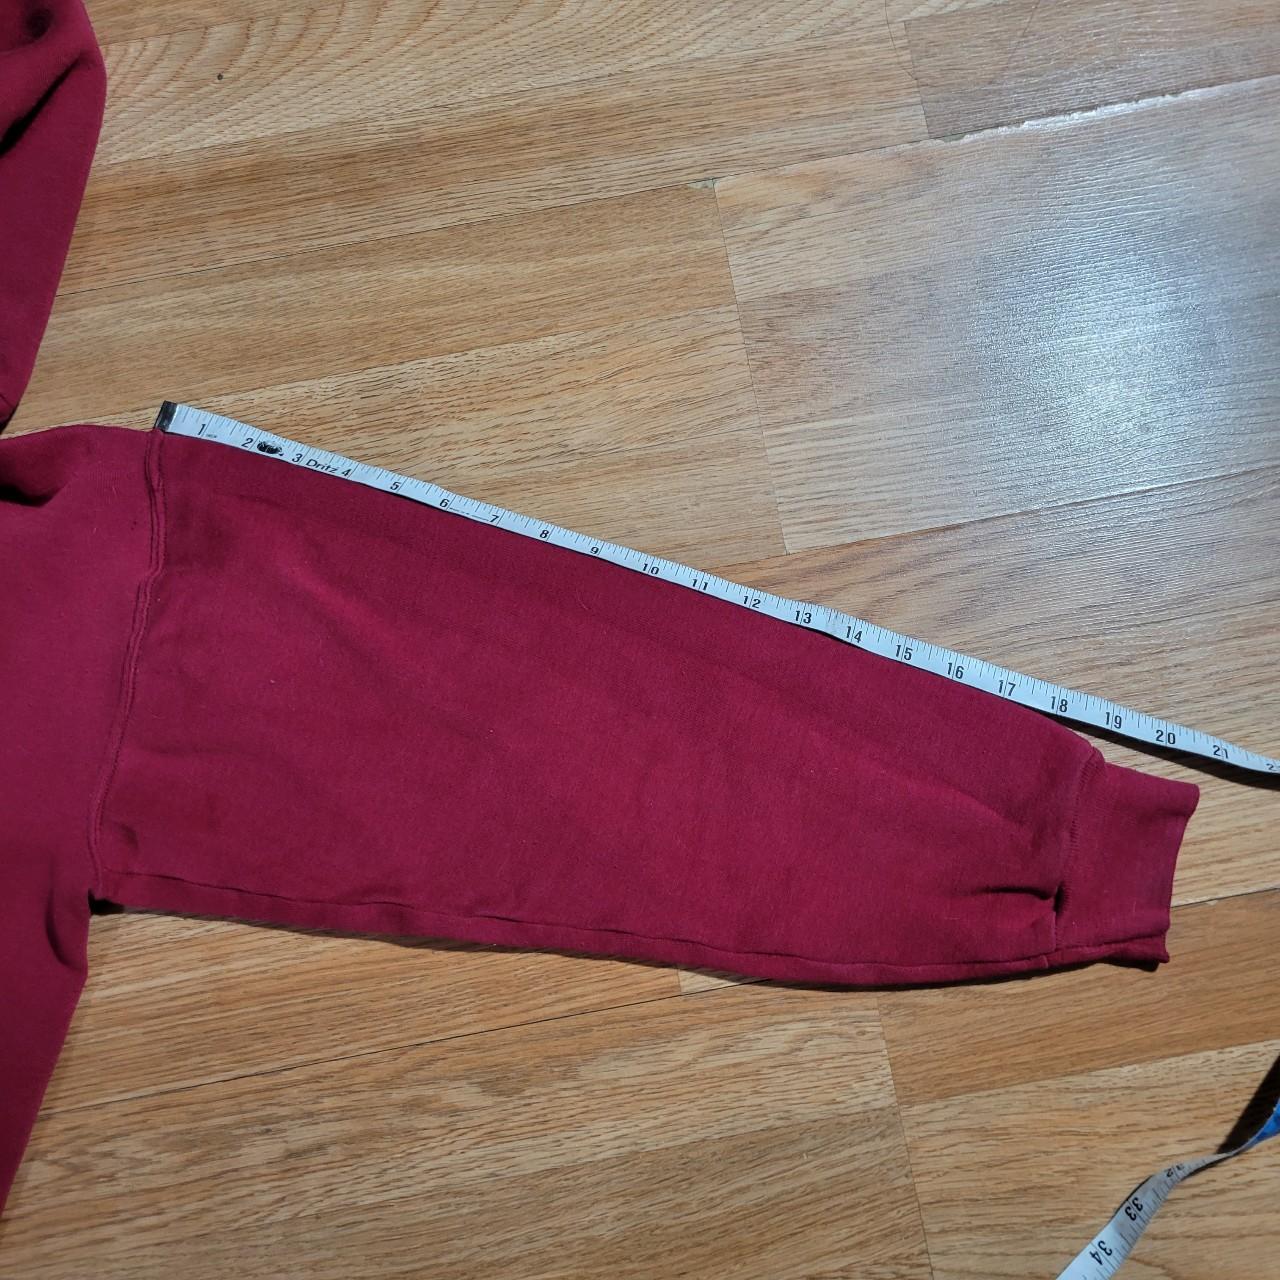 Vintage red Stanford pullover hoodie size large in - Depop